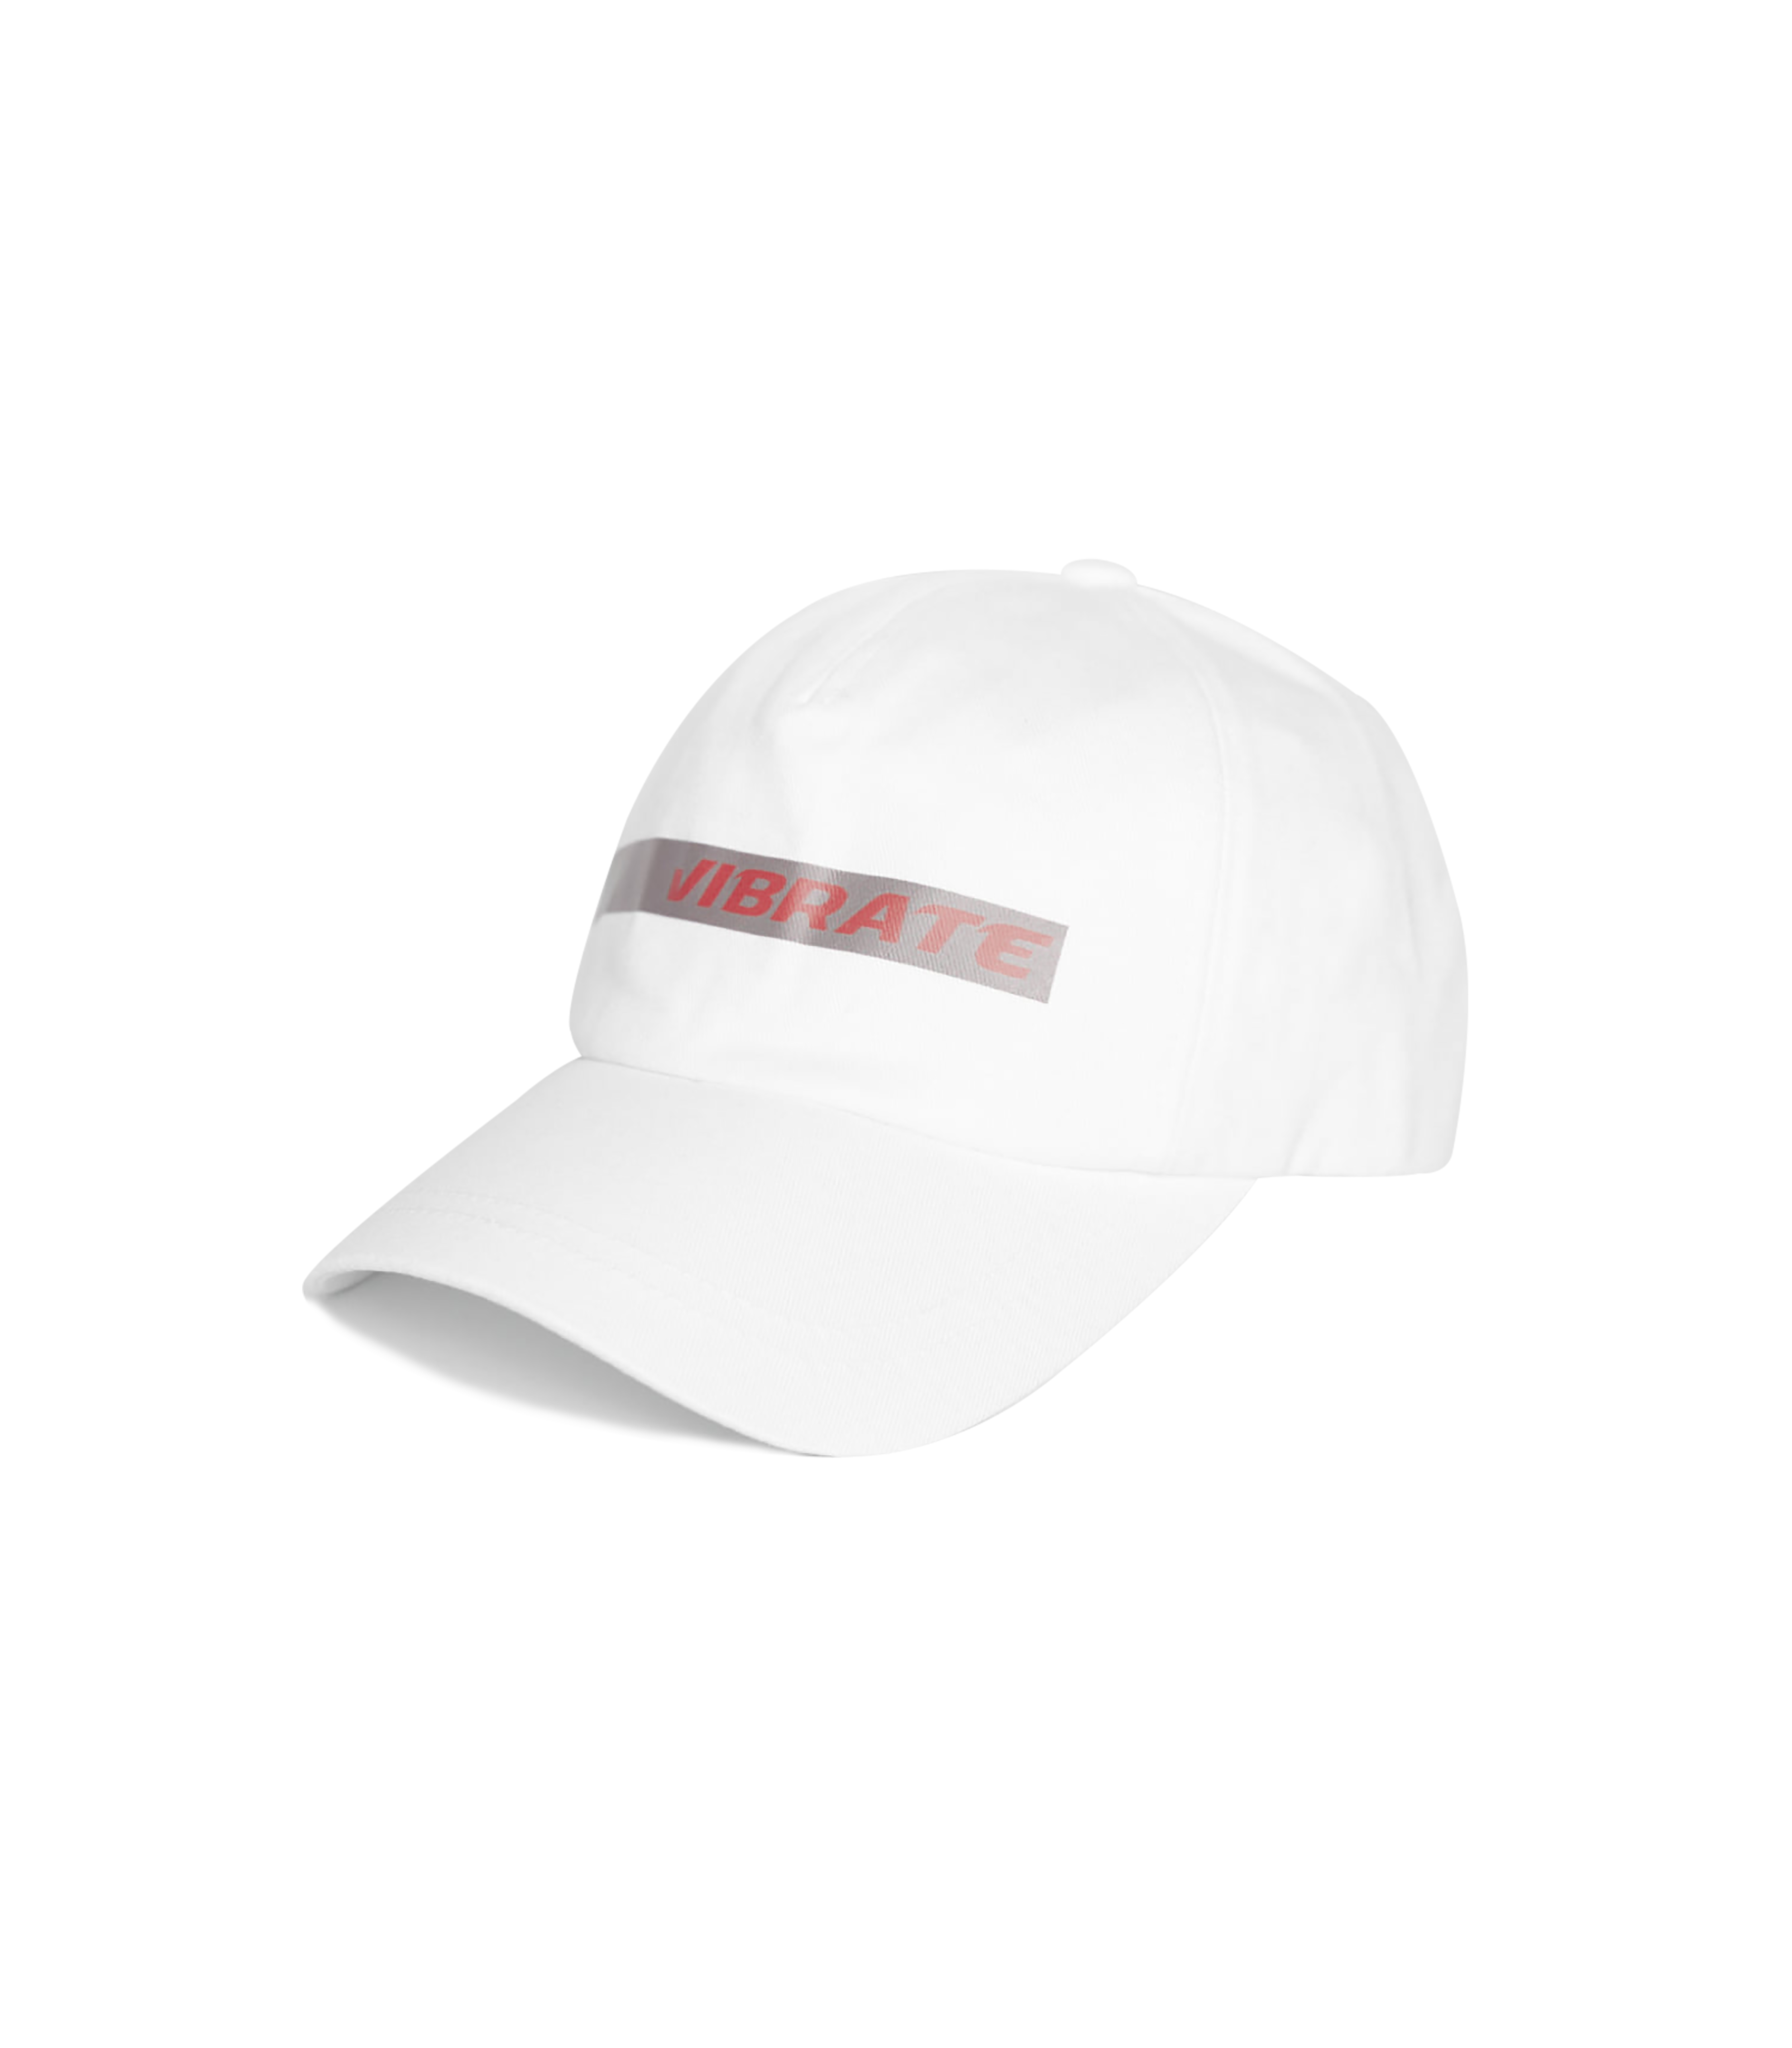 VIBRATEKIDS - TAPE LOGO 5 PANEL BALL CAP (WHITE)